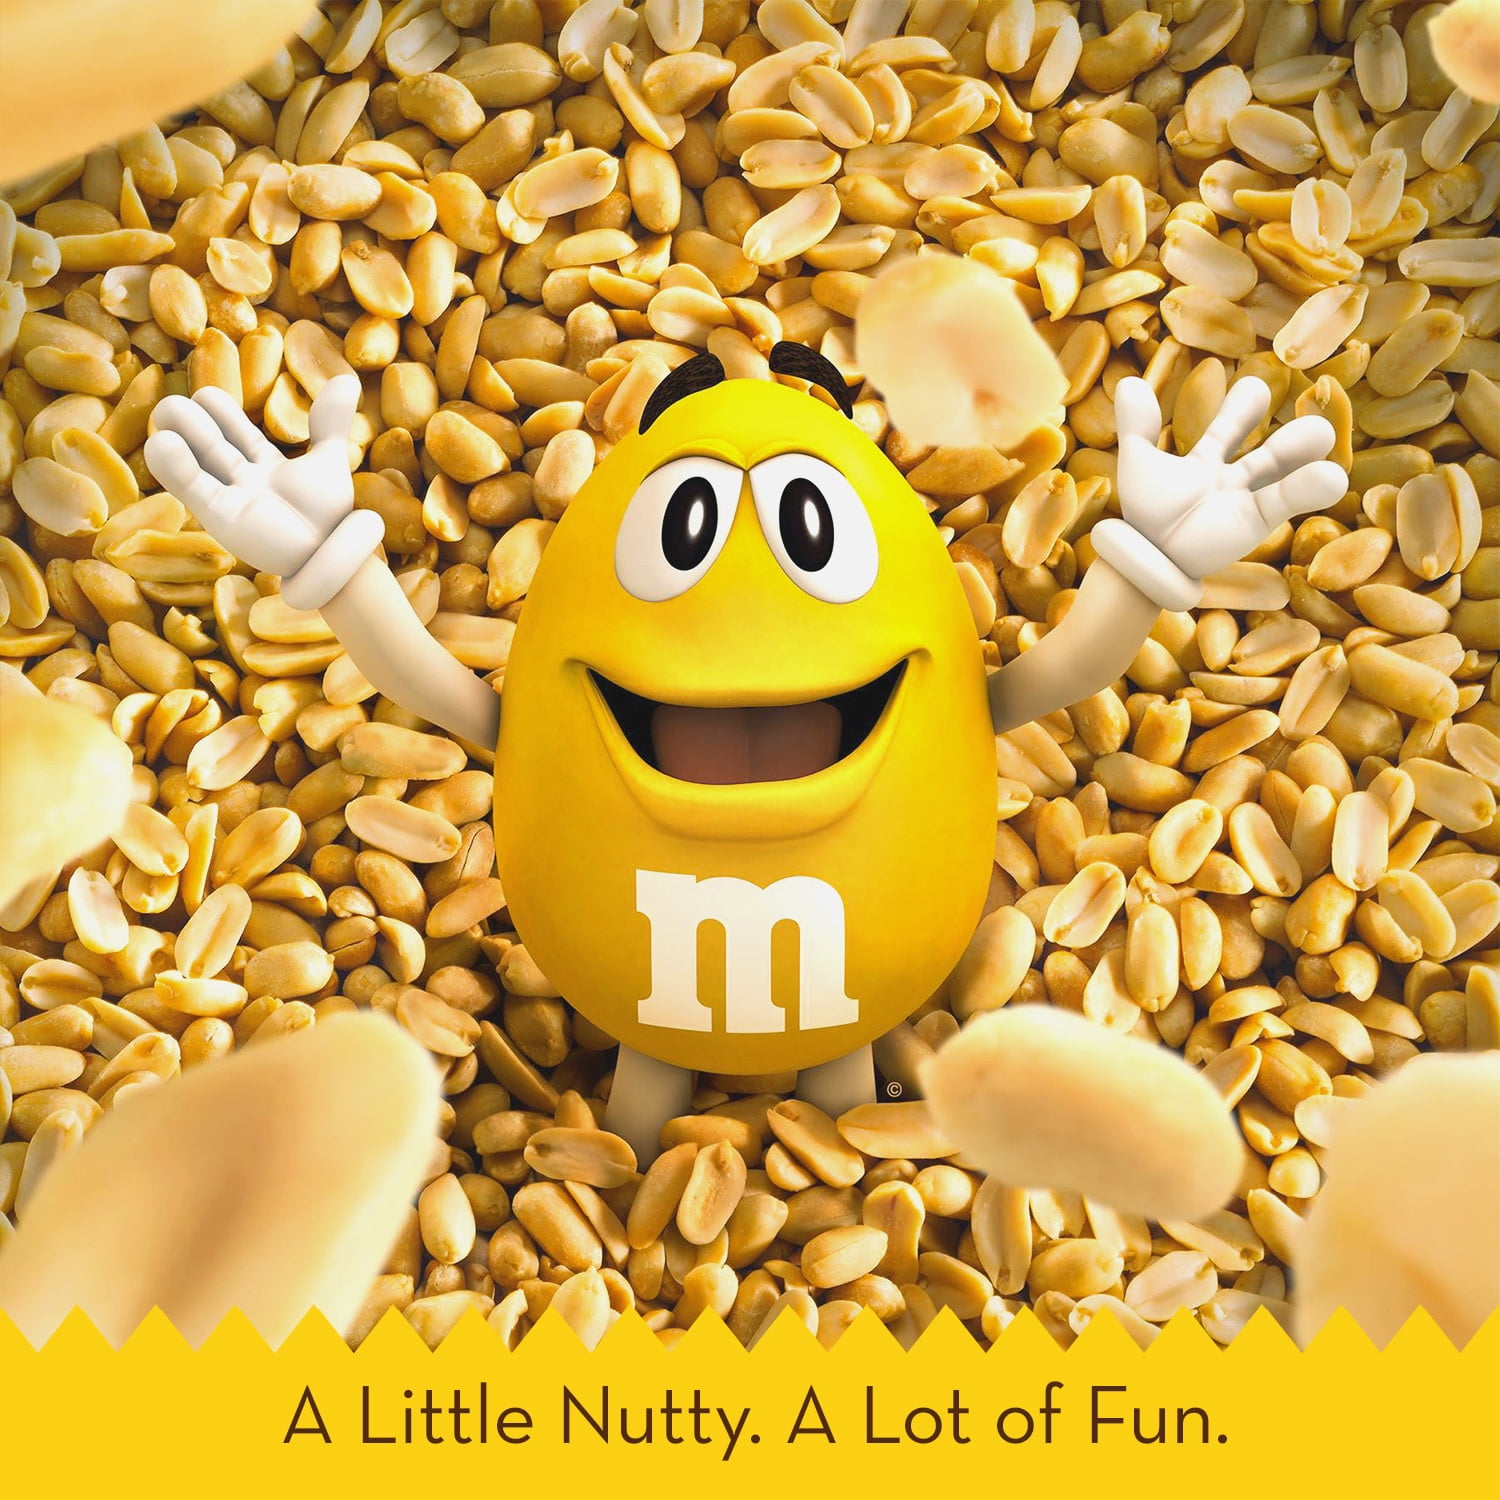 m&m's Peanut Large 8.82 oz